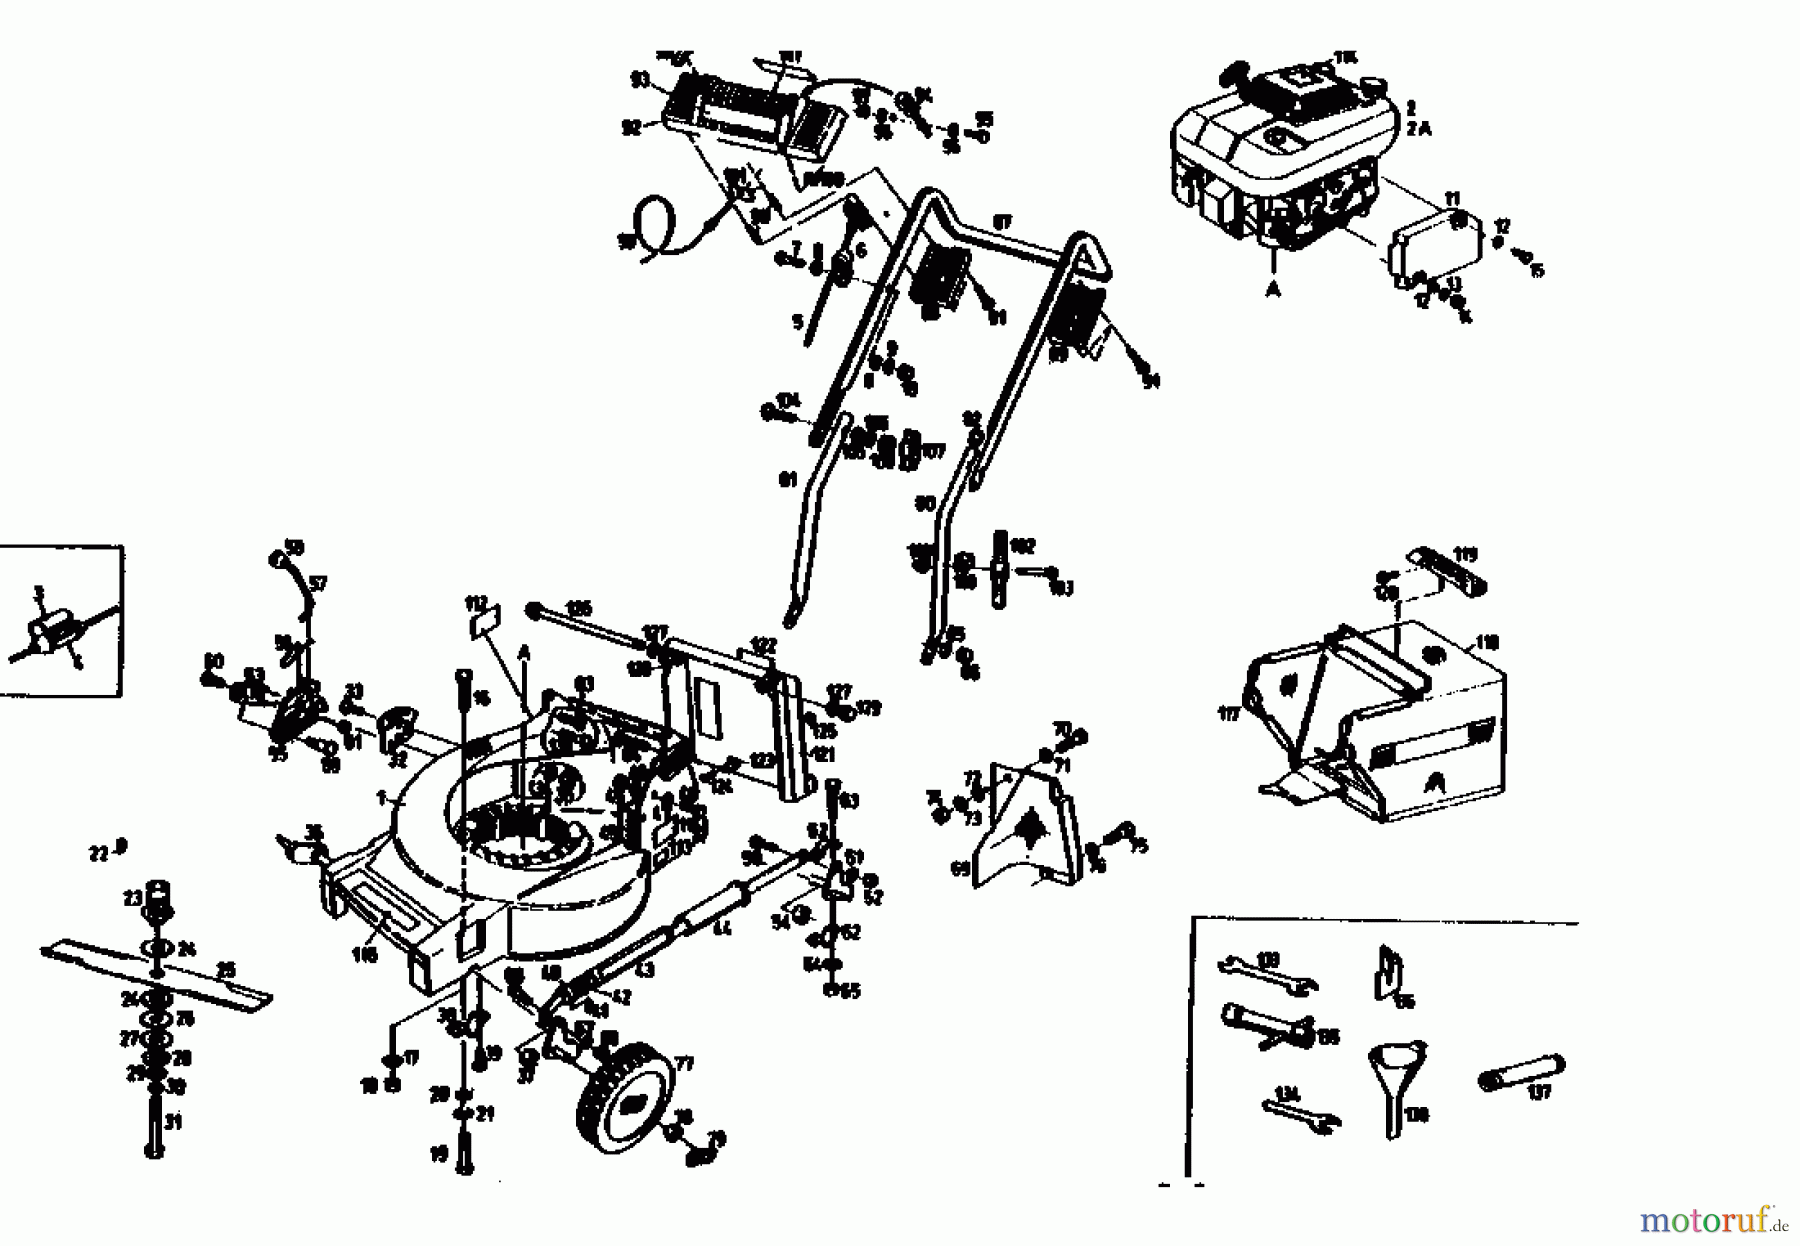  Gutbrod Motormäher MH 532 04005.01  (1990) Grundgerät